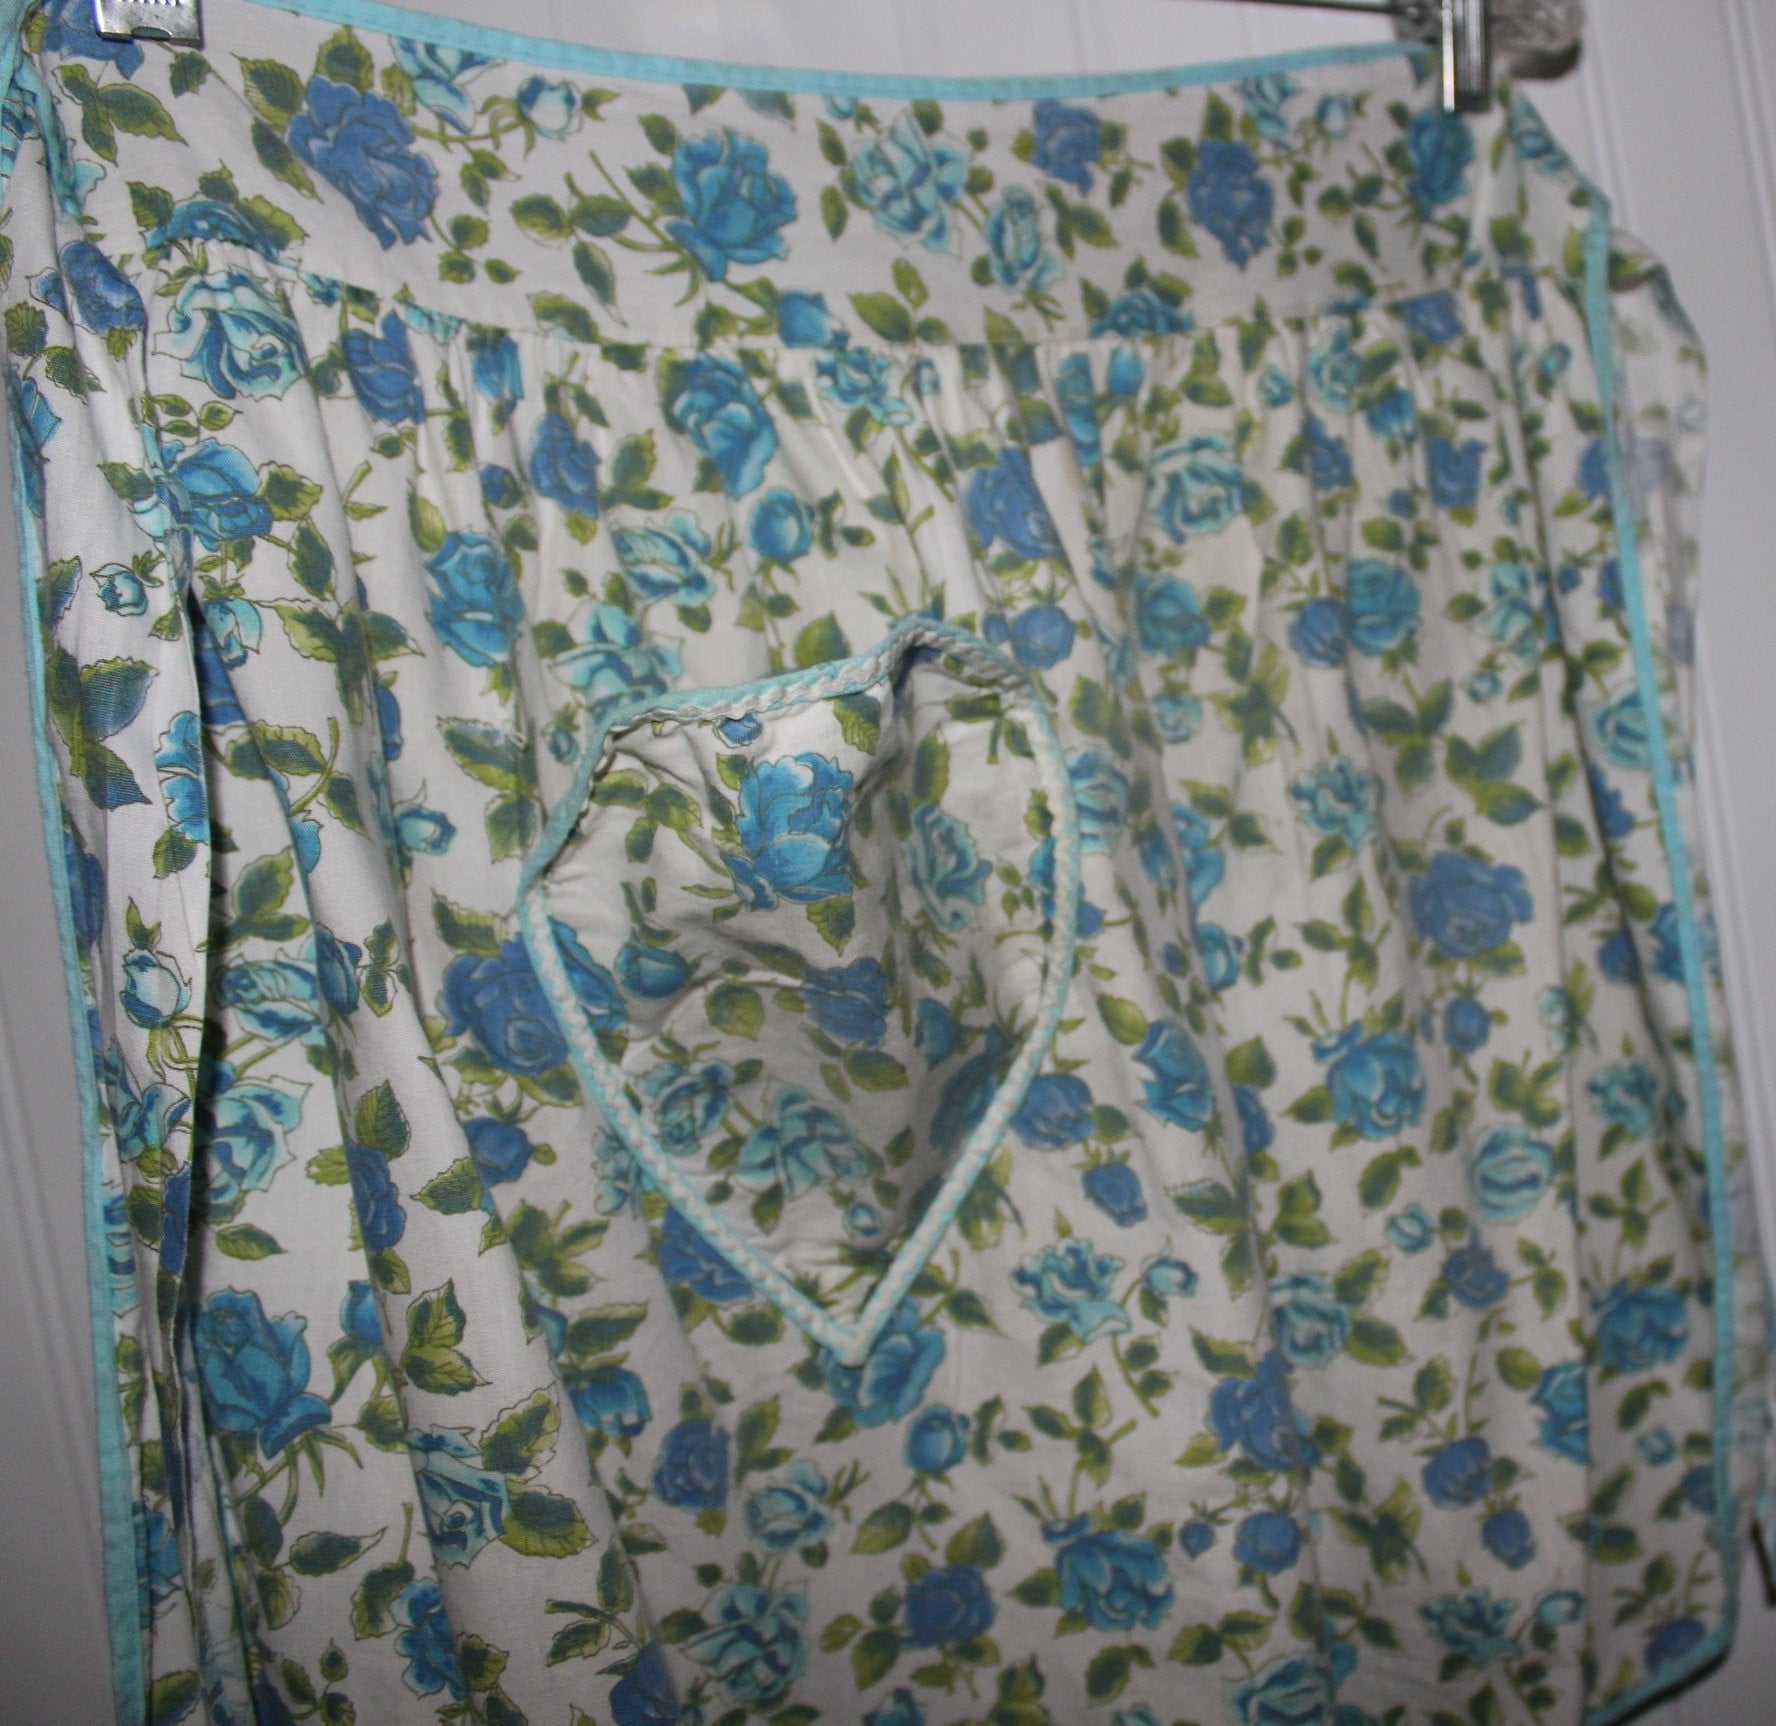 Kitchen Aprons 3 Vintage Mid Century Cotton Lace Trim Pocket Wear or Pattern 1950s